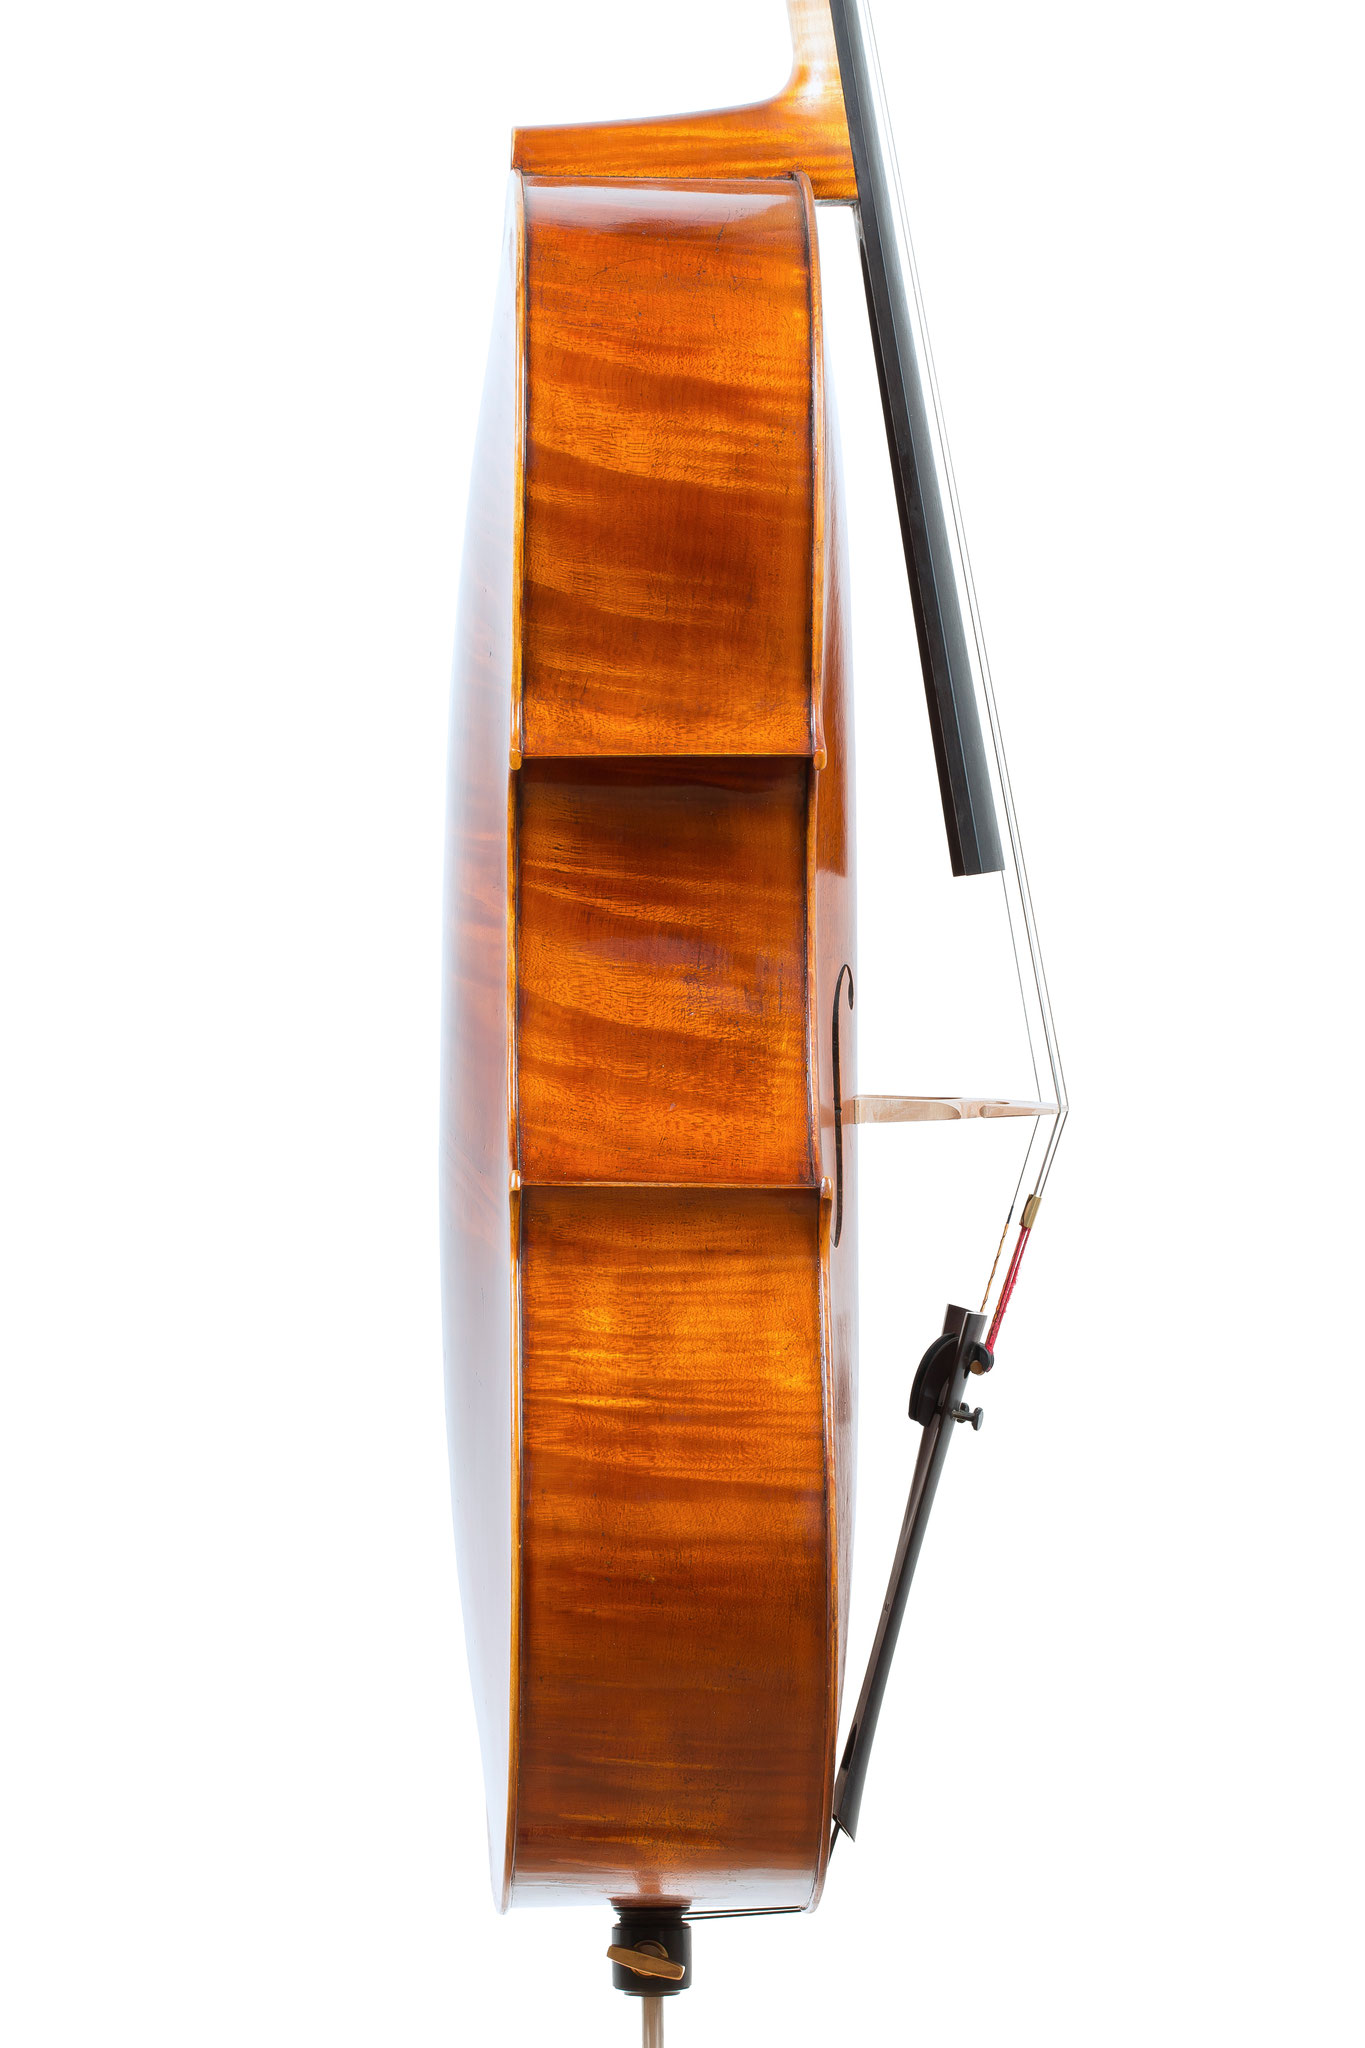 Violoncello after Antonio Stradivari Forma B piccola "ex-Feuermann" (2012/CH), Photo: VDB Photography